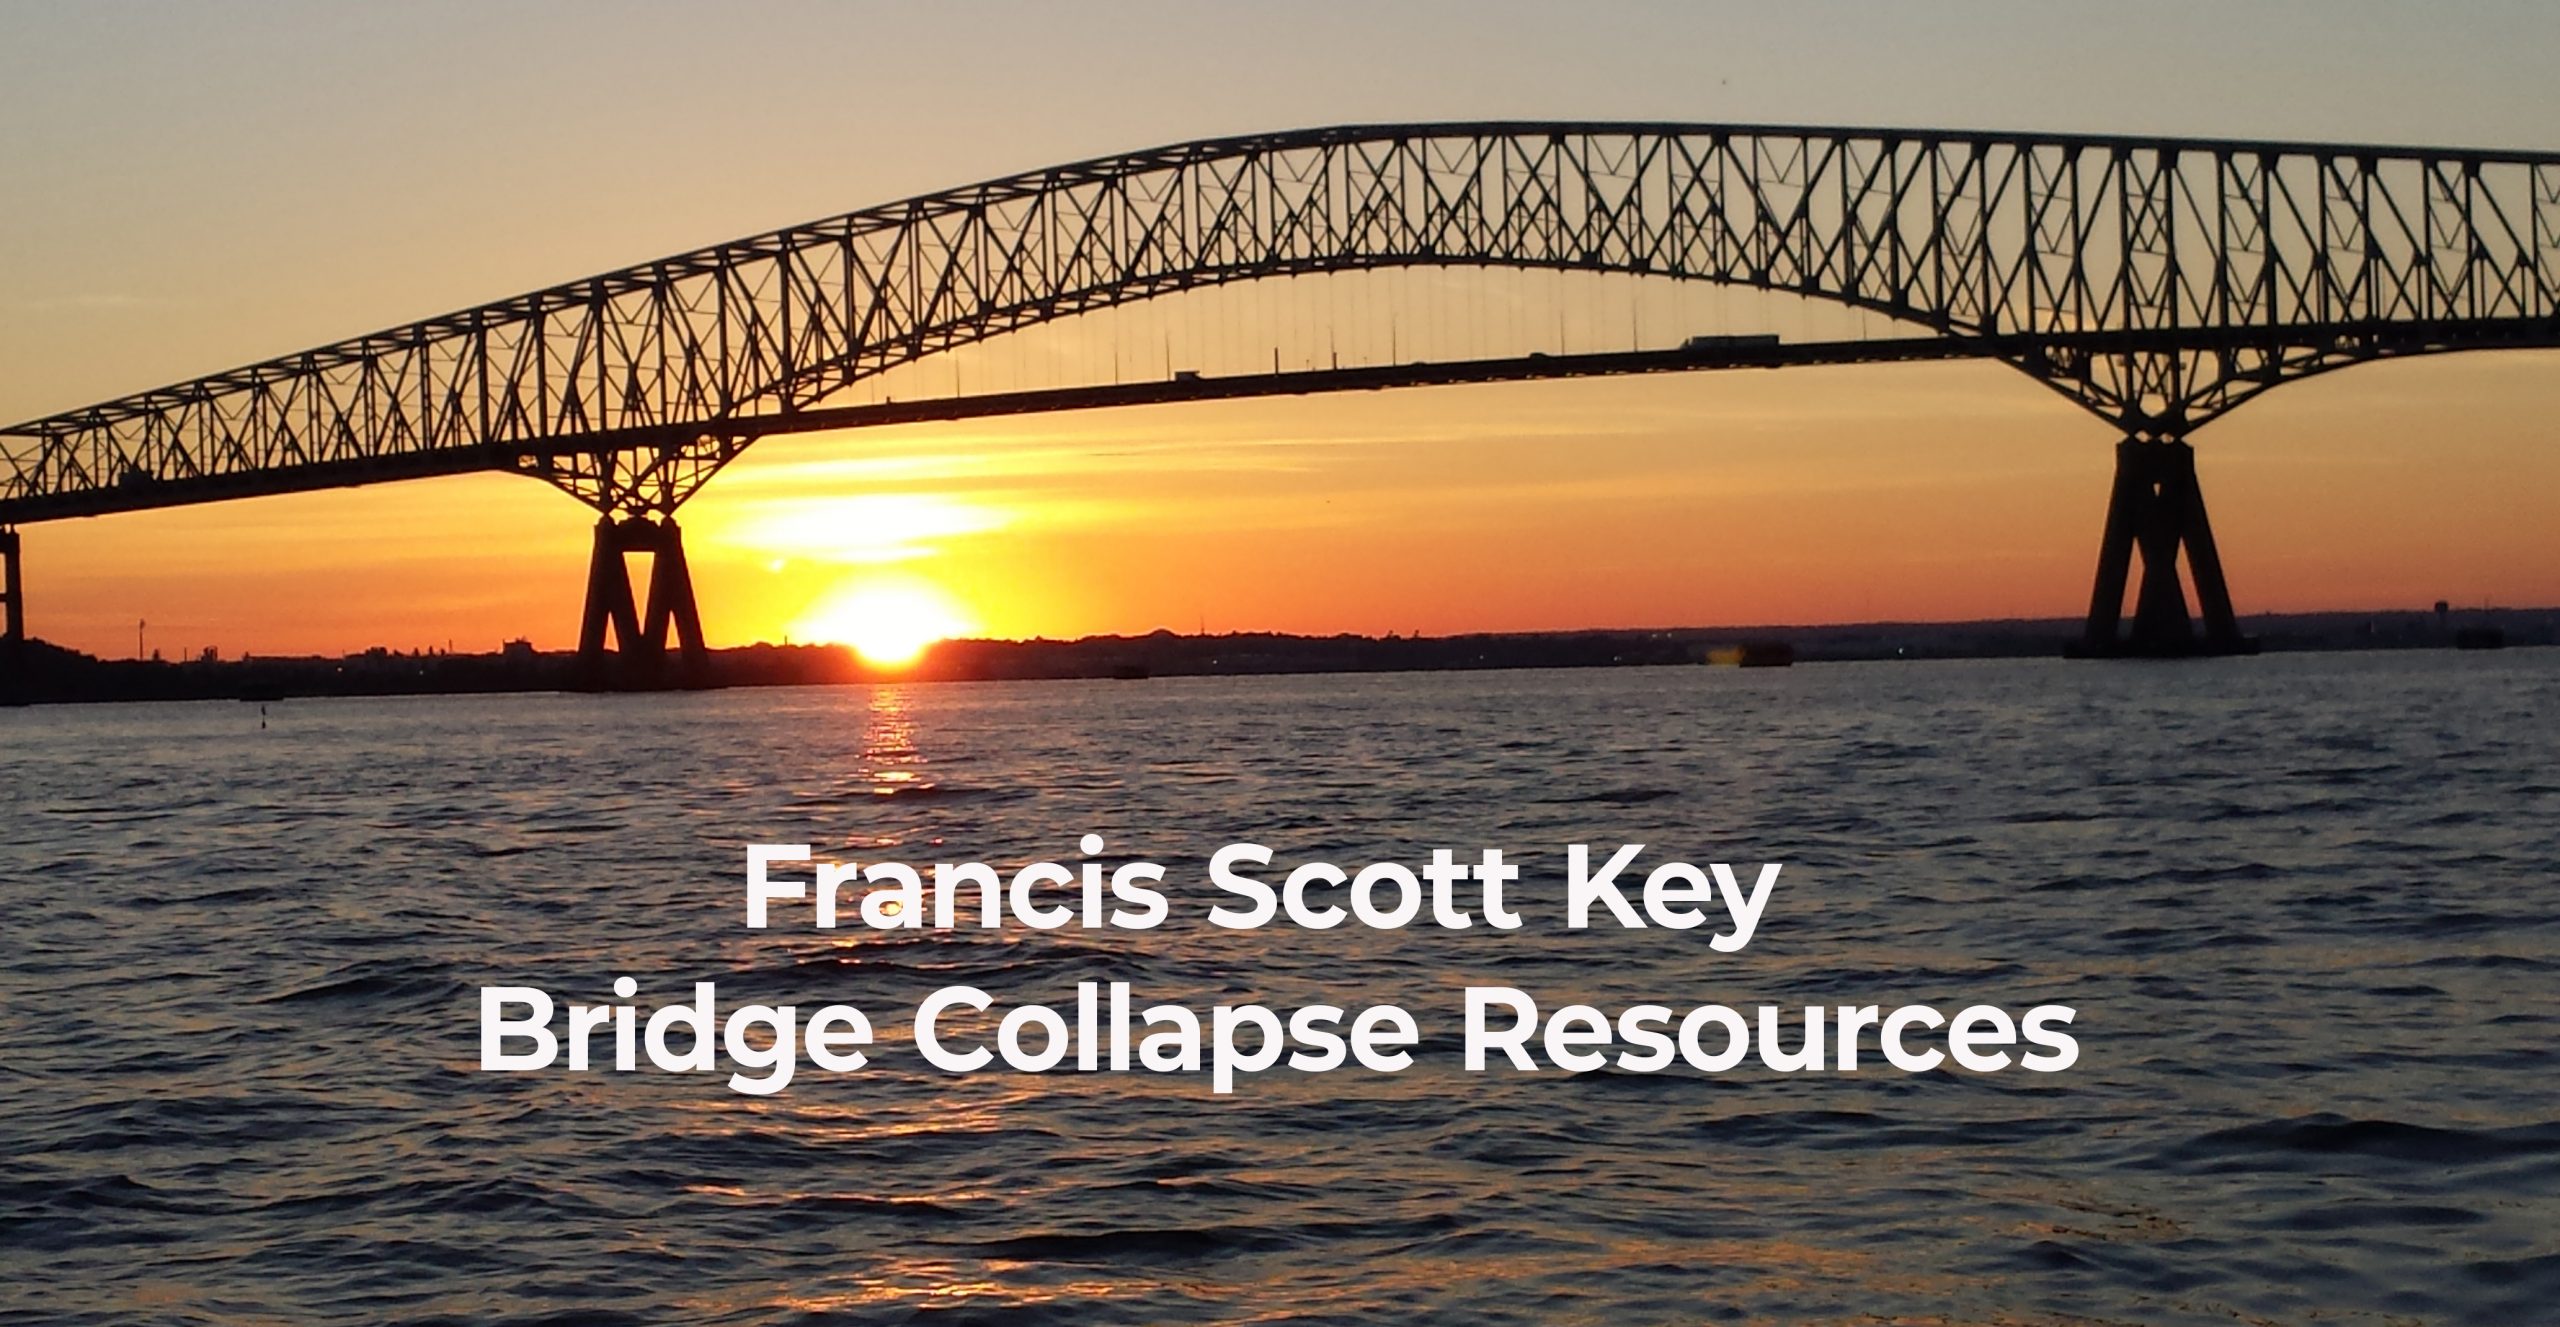 Francis Scott Key Bridge Collapse Resources